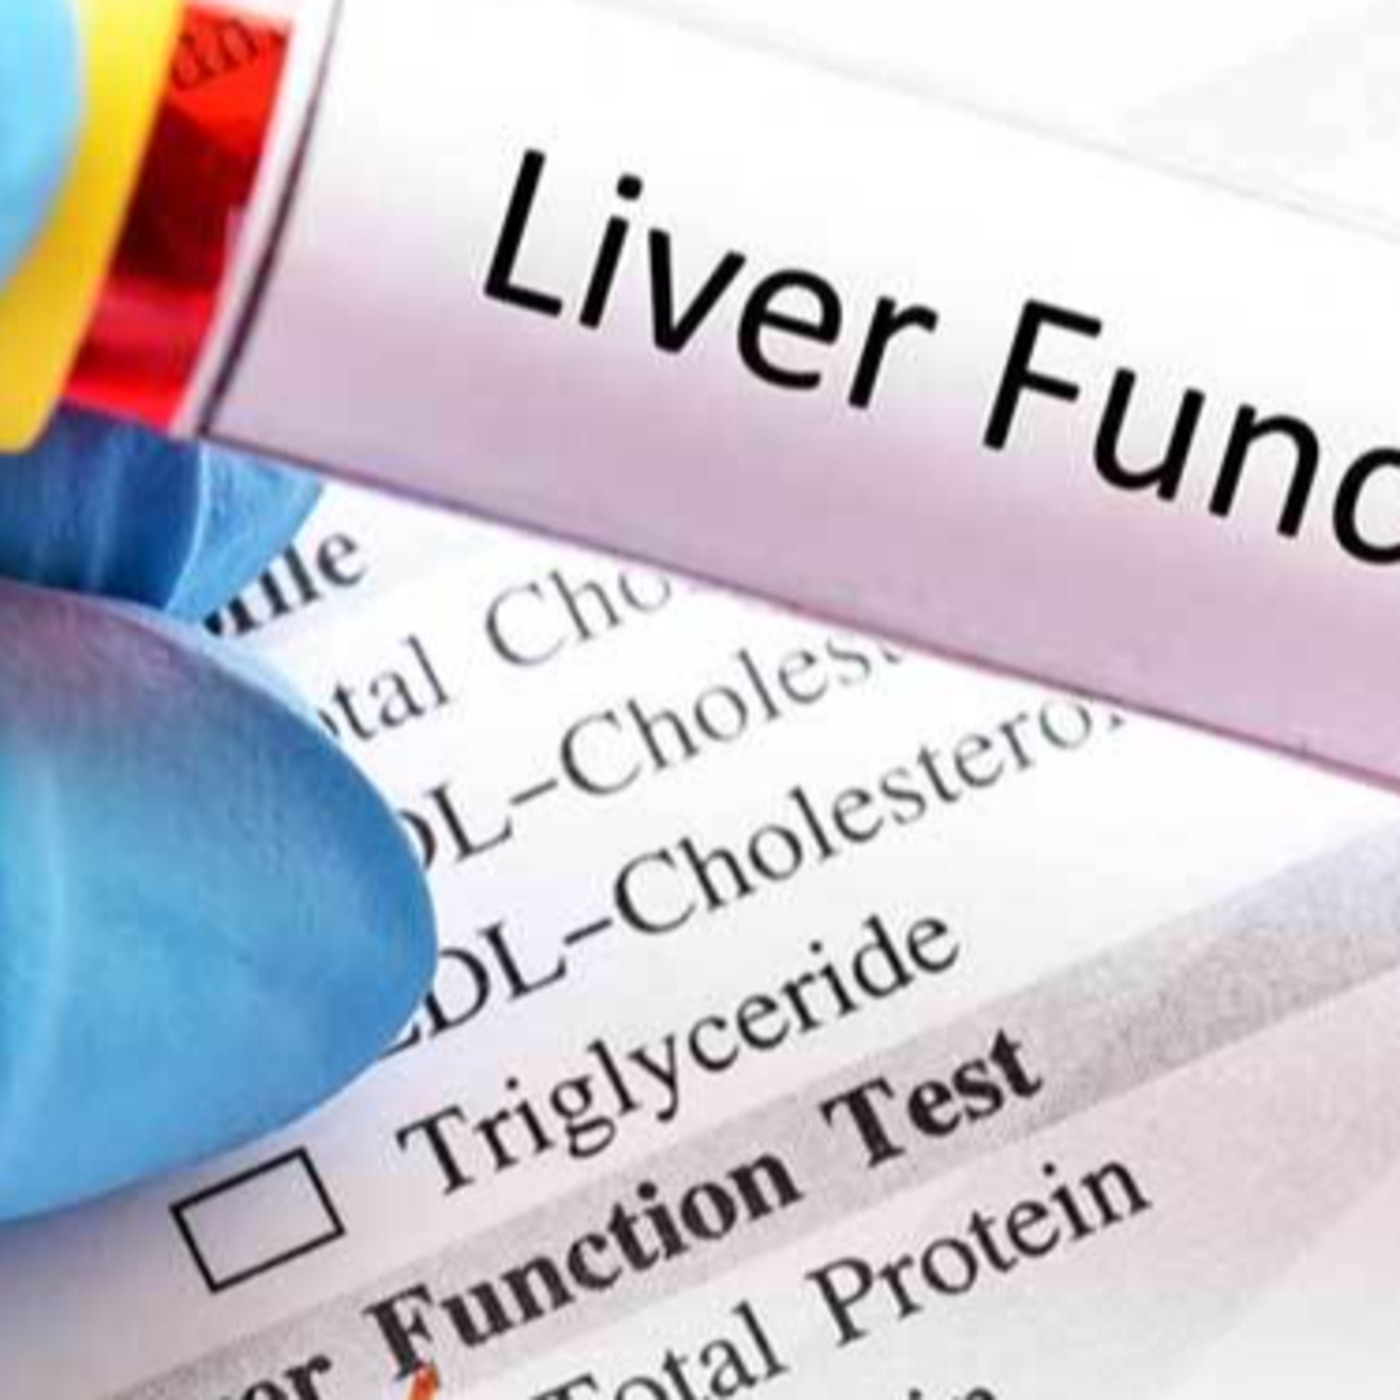 Episode 111: Liver Function Tests - Understanding Your Blood Test Results